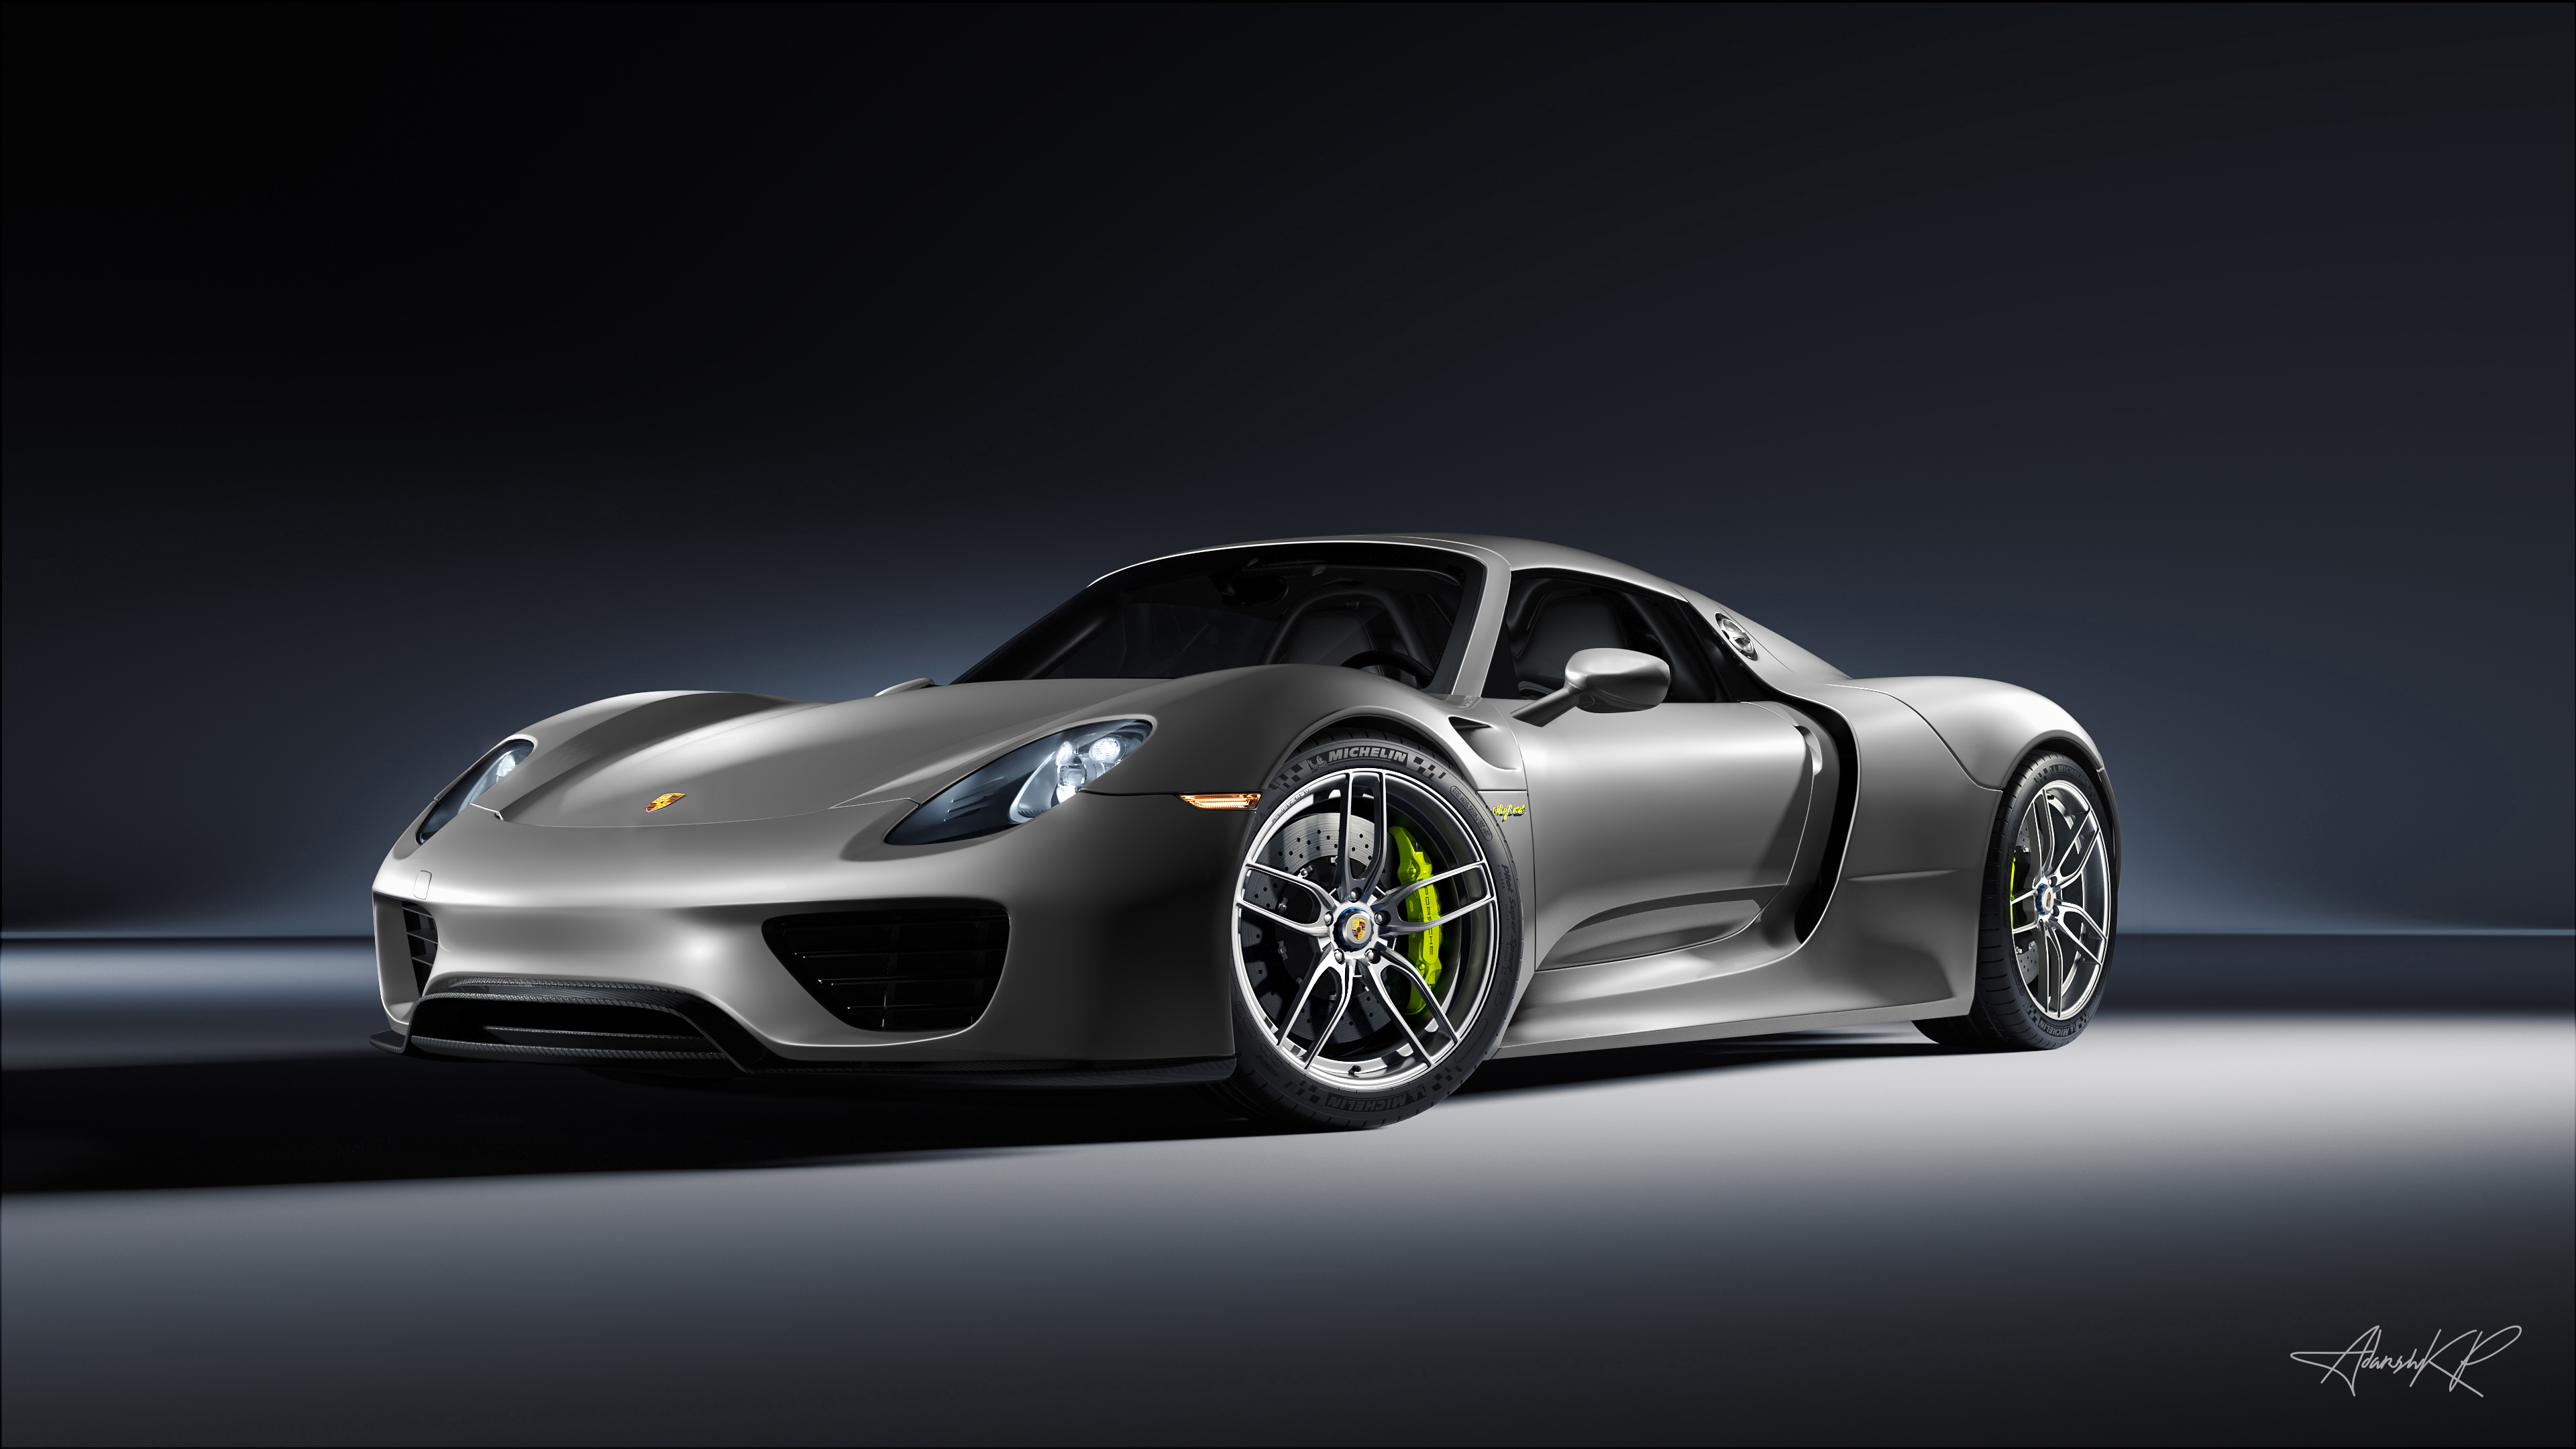 4k Porsche 918 Spyder, HD Cars, 4k Wallpapers, Images ...